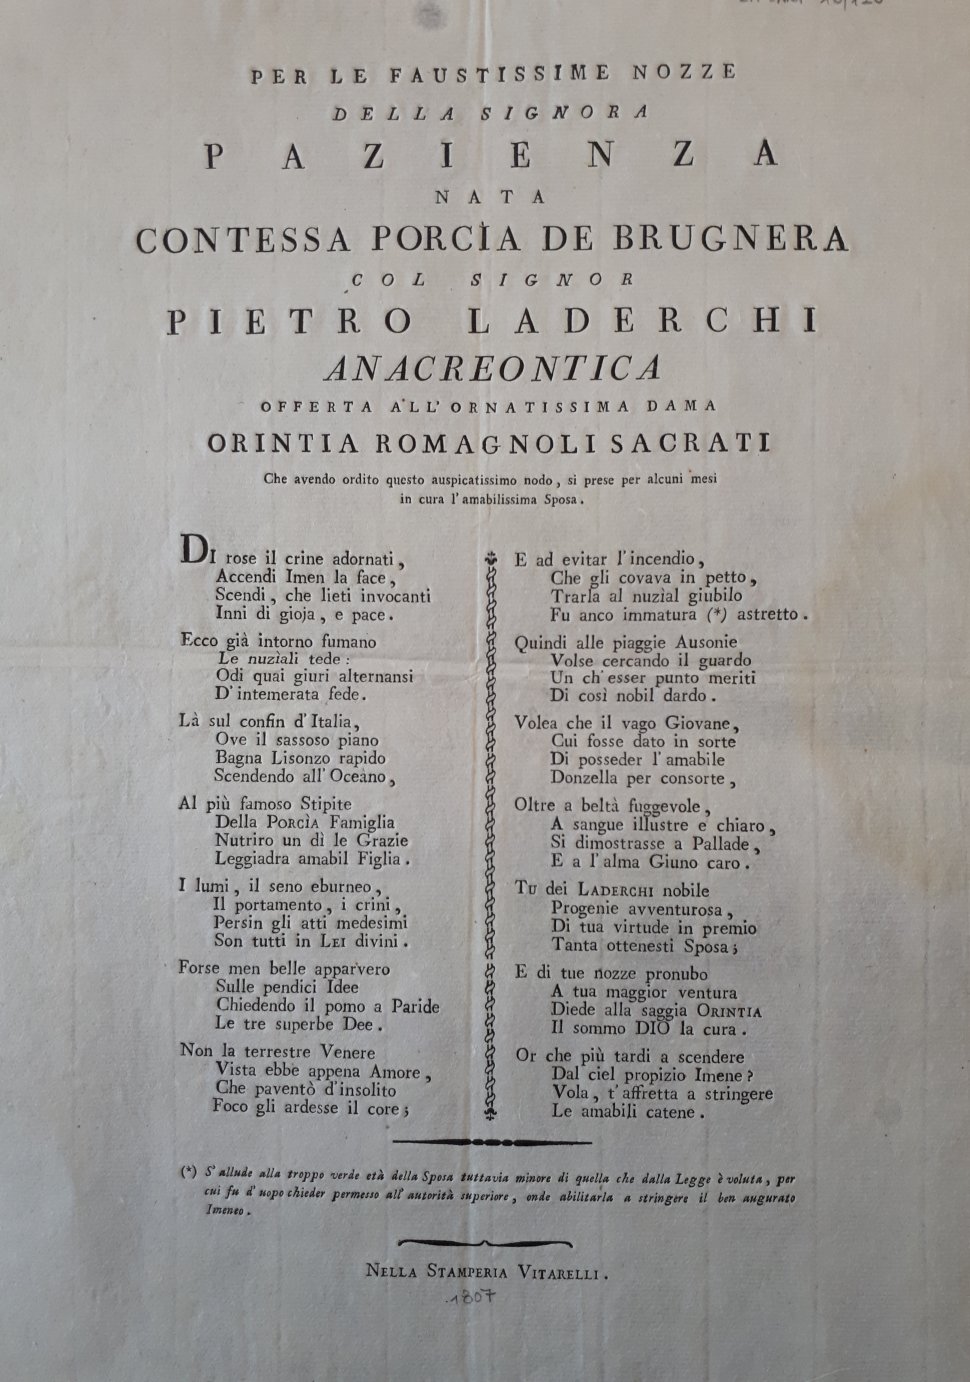 Anacreontica scritta da Orintia Romagnoli Sacrati per le nozze Laderchi-Porcia.